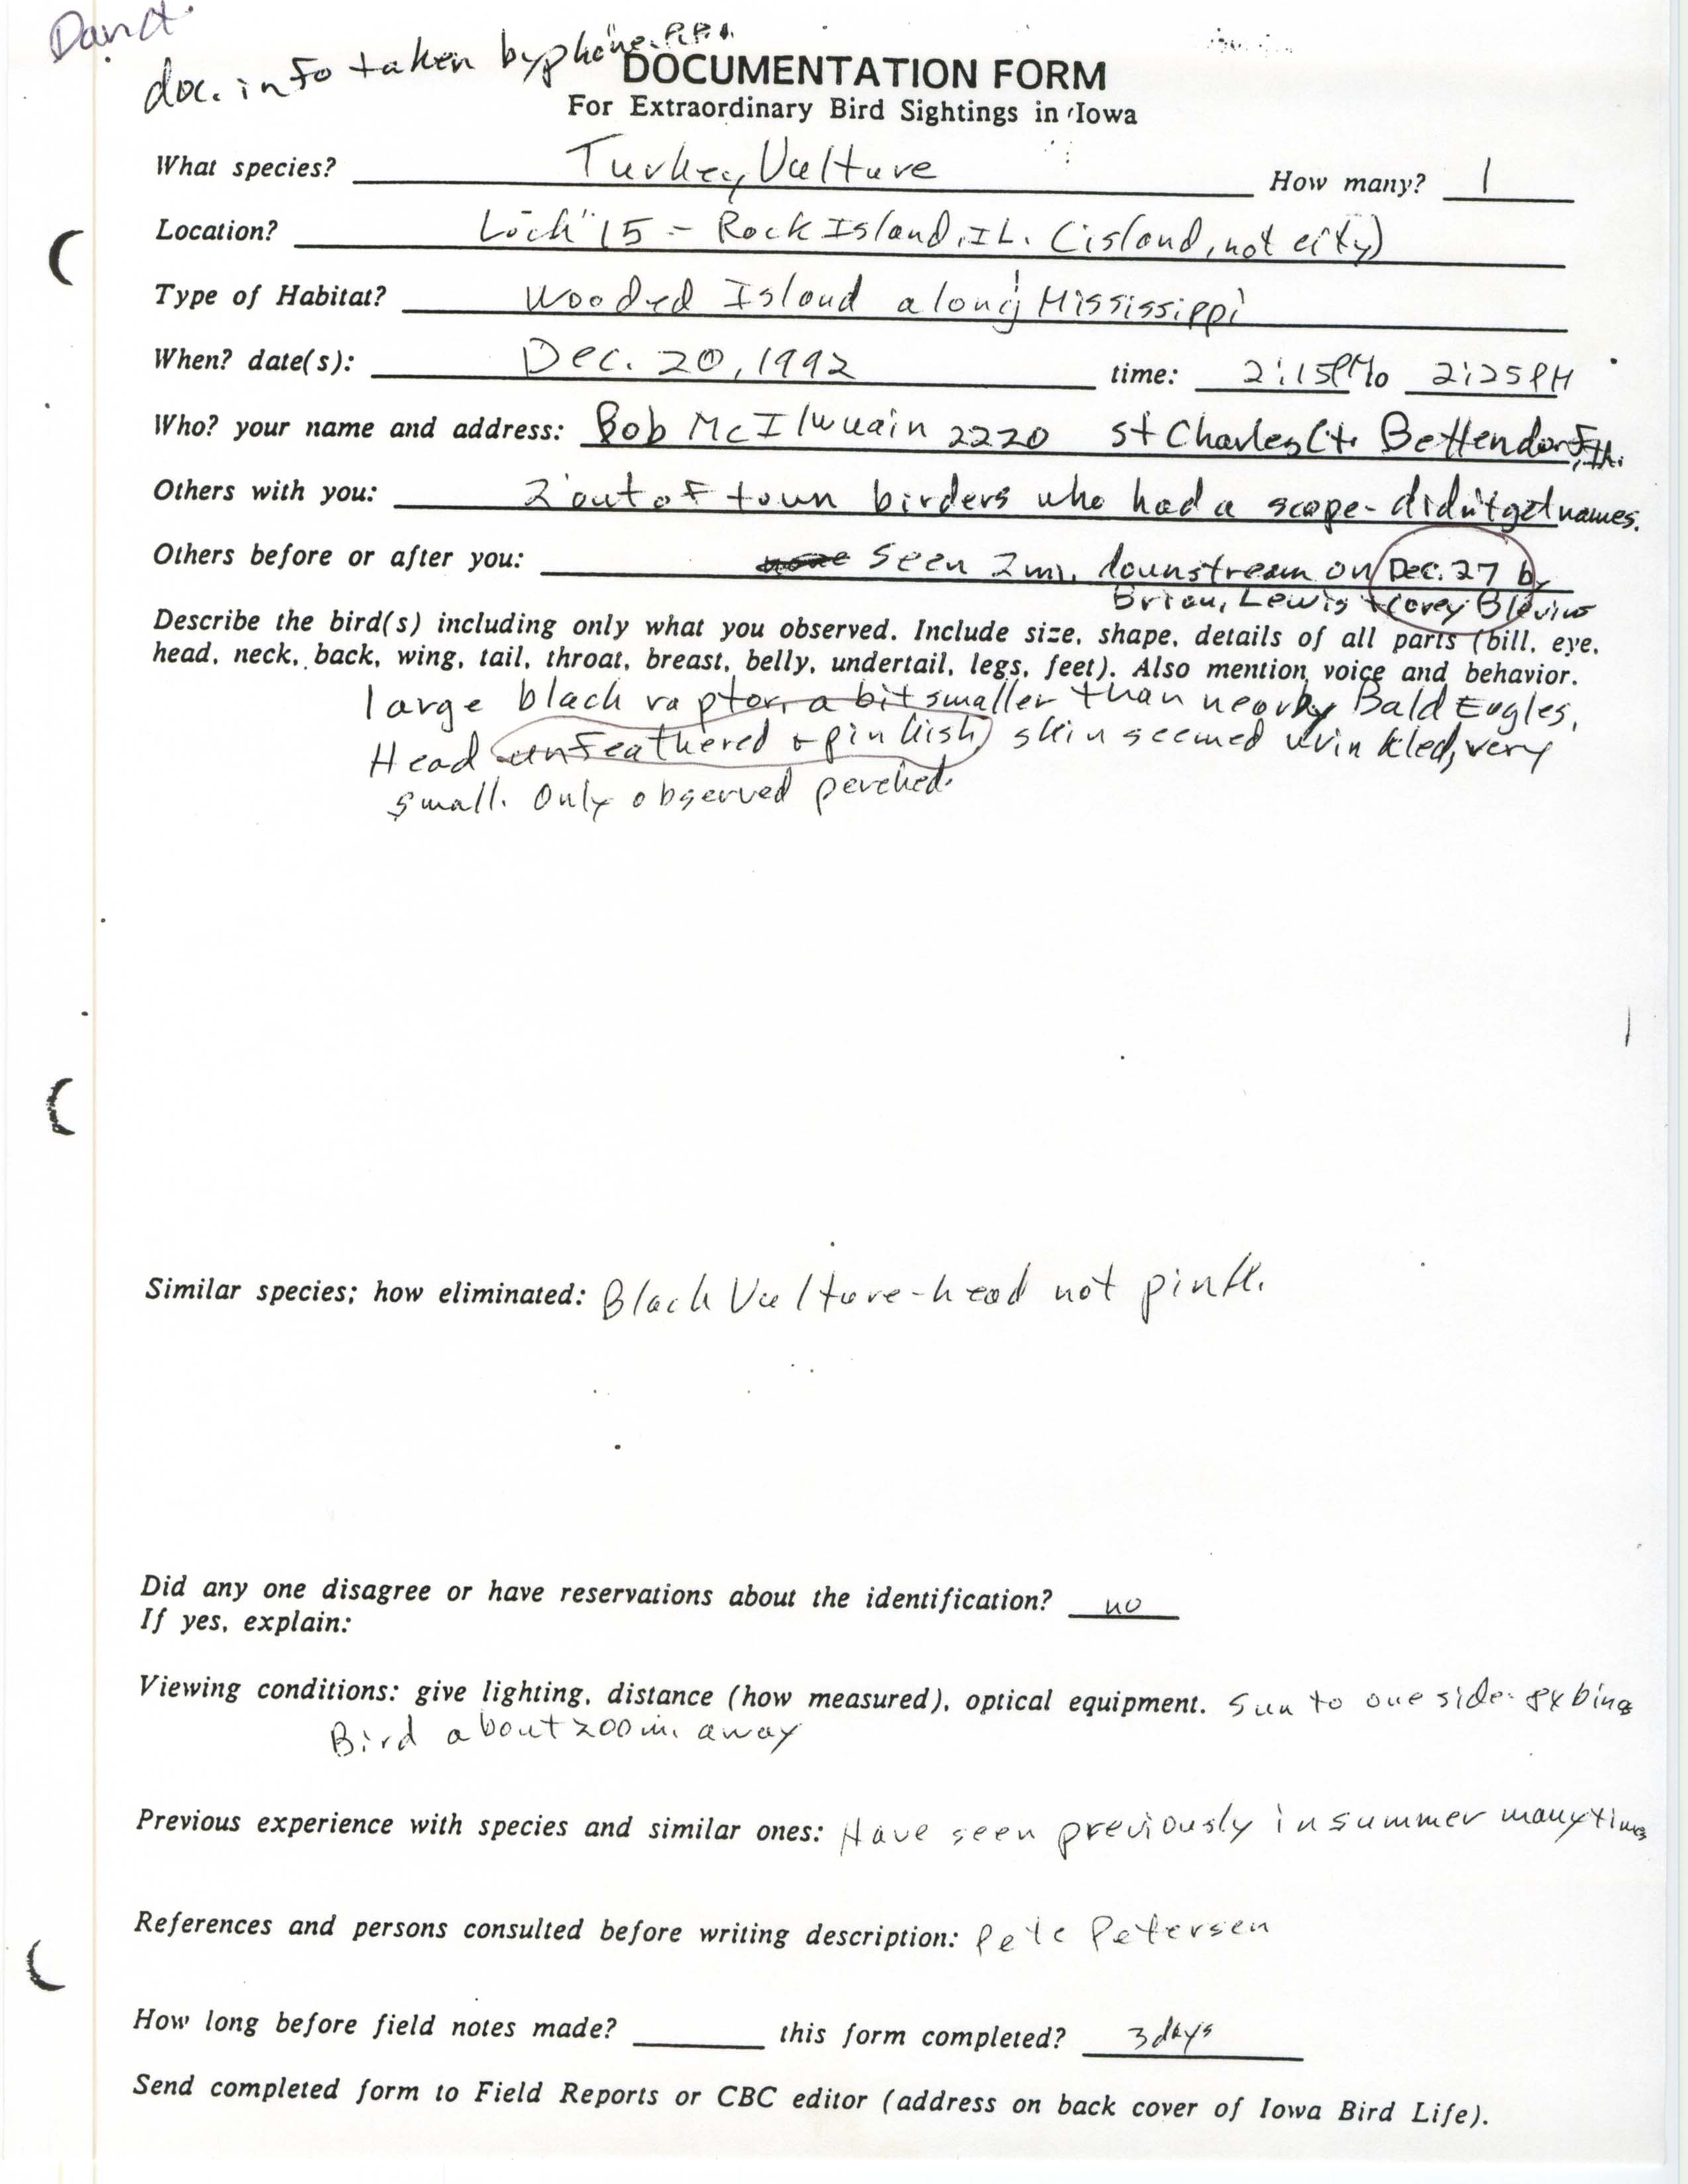 Rare bird documentation form for Turkey Vulture at Lock 15, 1992